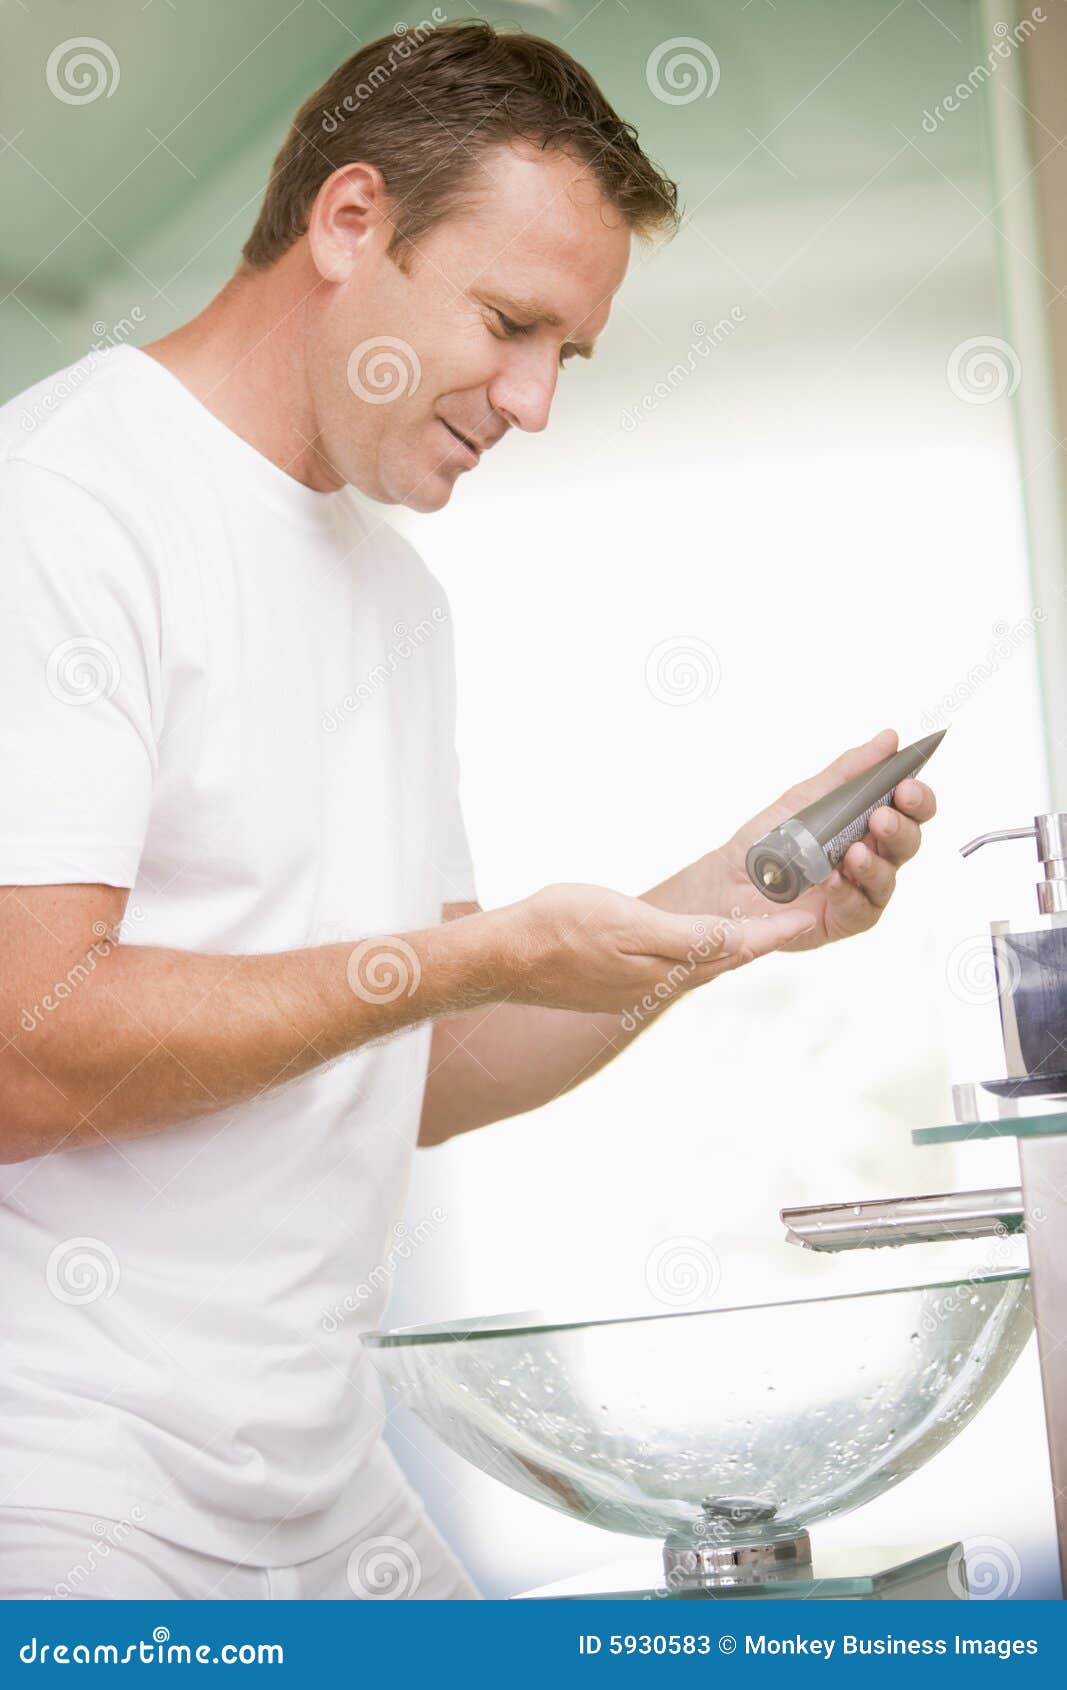 man in bathroom applying aftershave